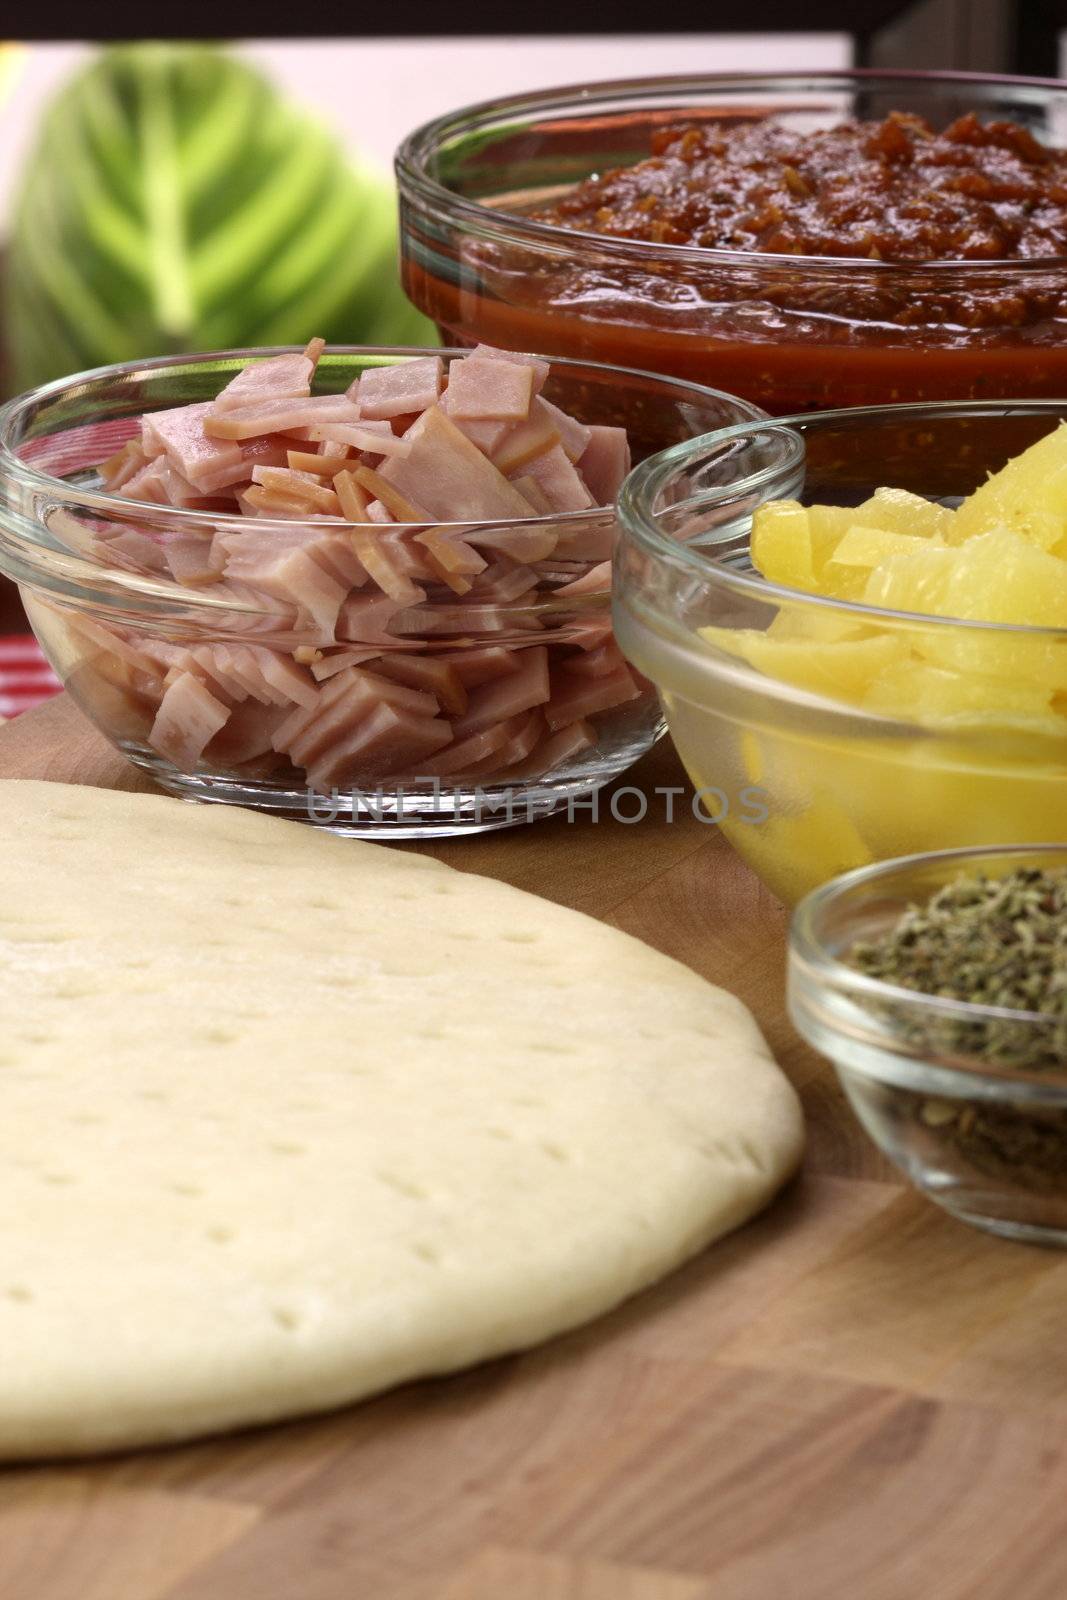 hawaiian pizza ingredients and utensils  on  wood cutting board 